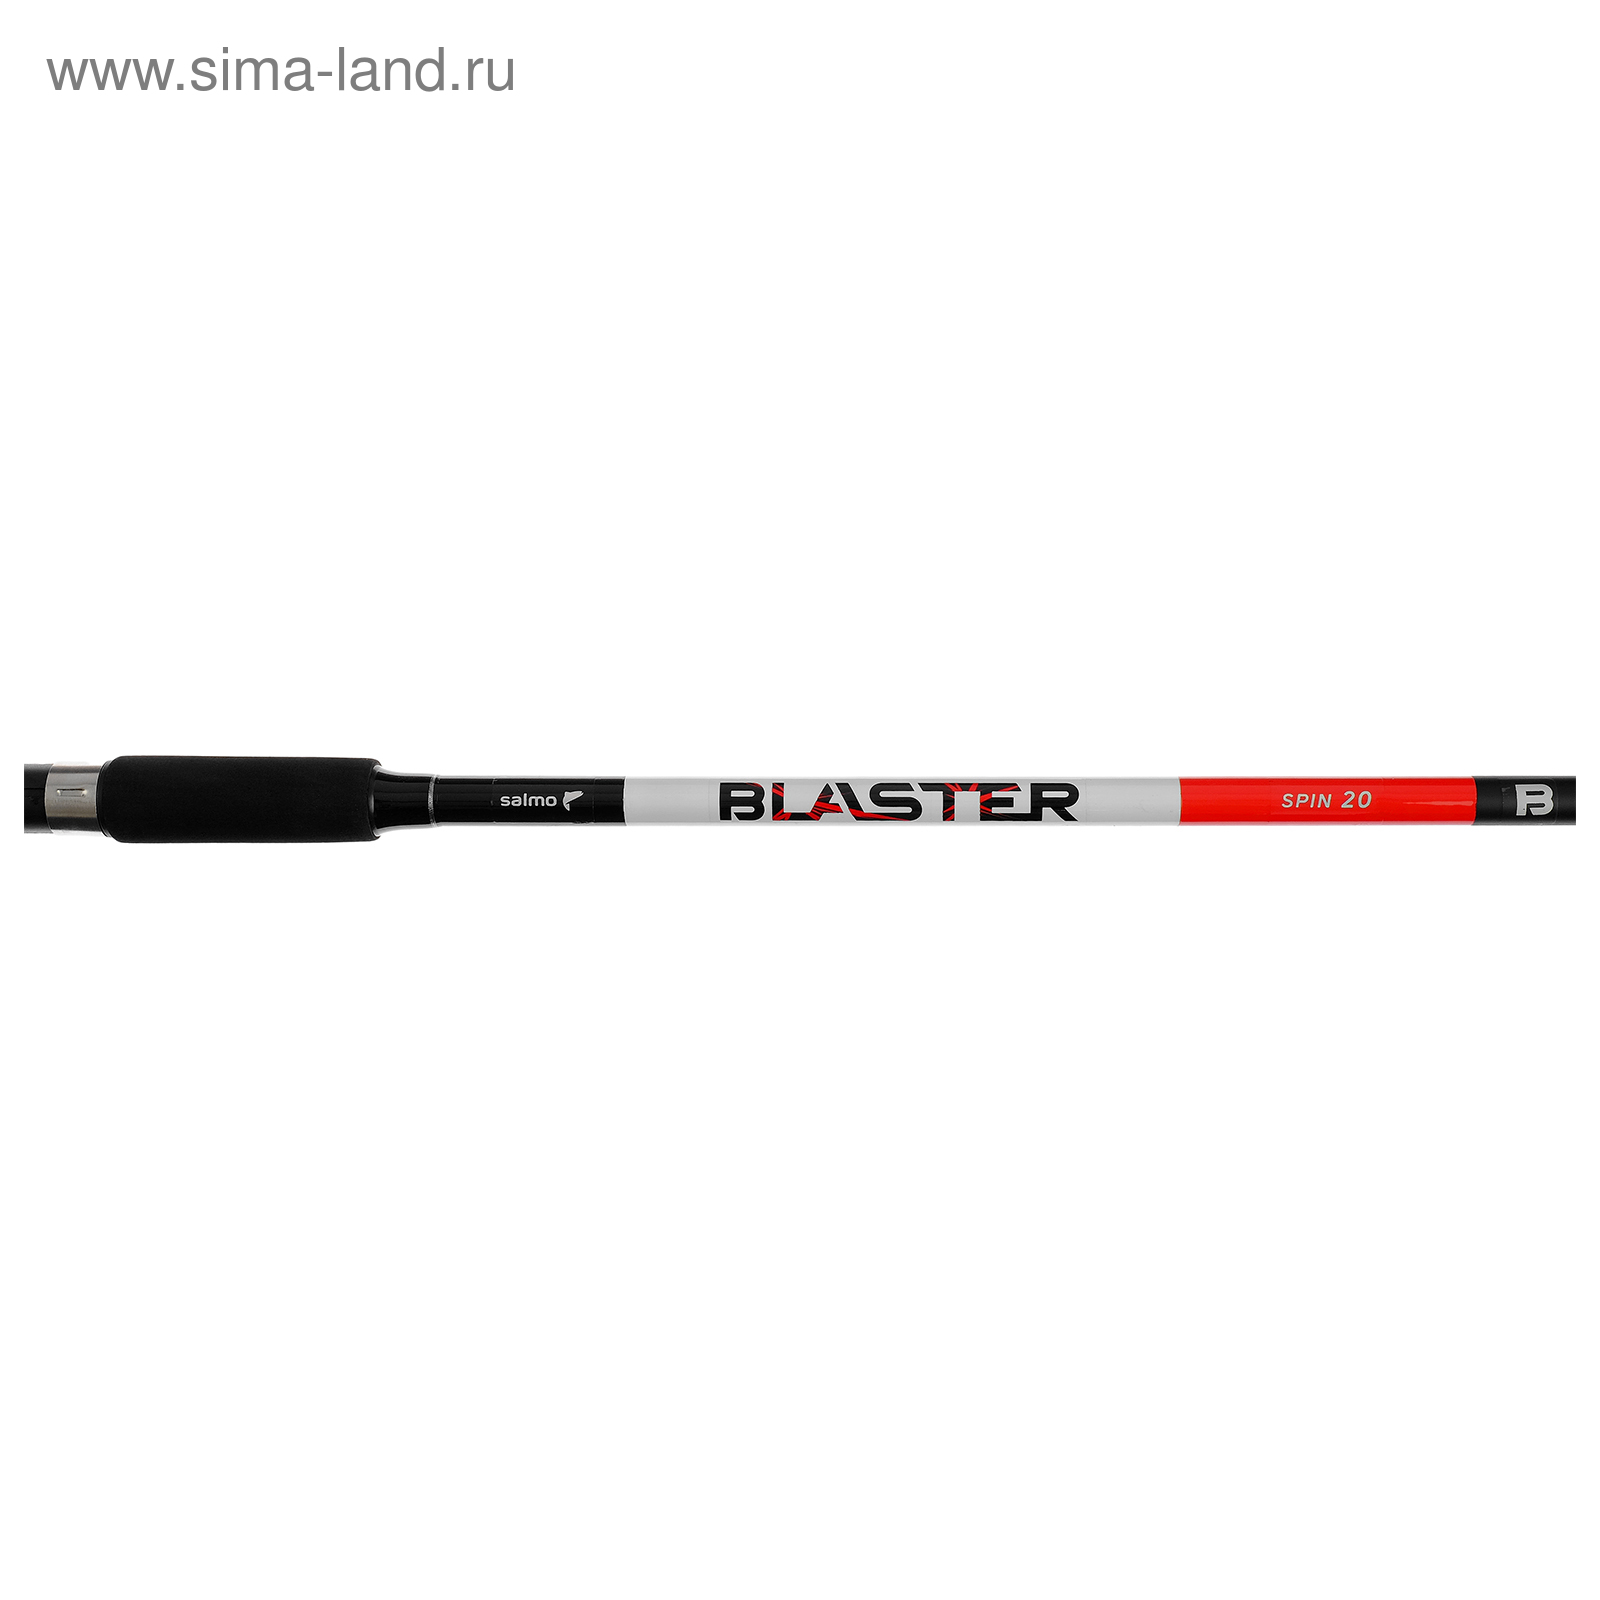 Spin blaster. Спиннинг Salmo Blaster. Спиннинг Blaster Spin. Salmo Blaster 2.7 тест 40-80. Blaster Spin 40.